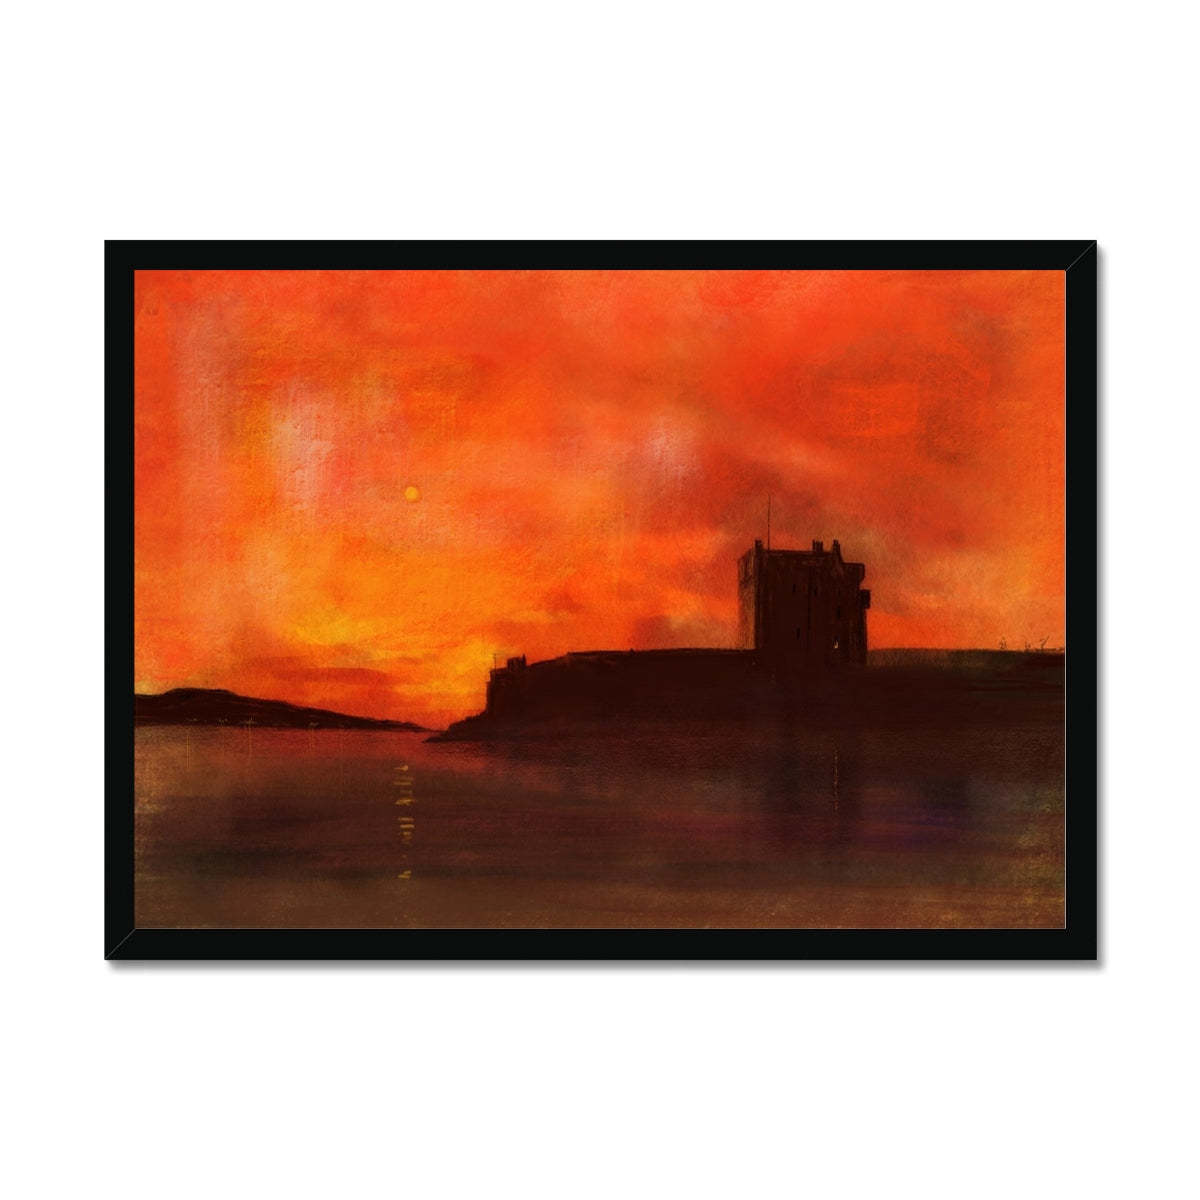 Broughty Castle Sunset Painting | Framed Prints From Scotland-Framed Prints-Scottish Castles Art Gallery-A2 Landscape-Black Frame-Paintings, Prints, Homeware, Art Gifts From Scotland By Scottish Artist Kevin Hunter